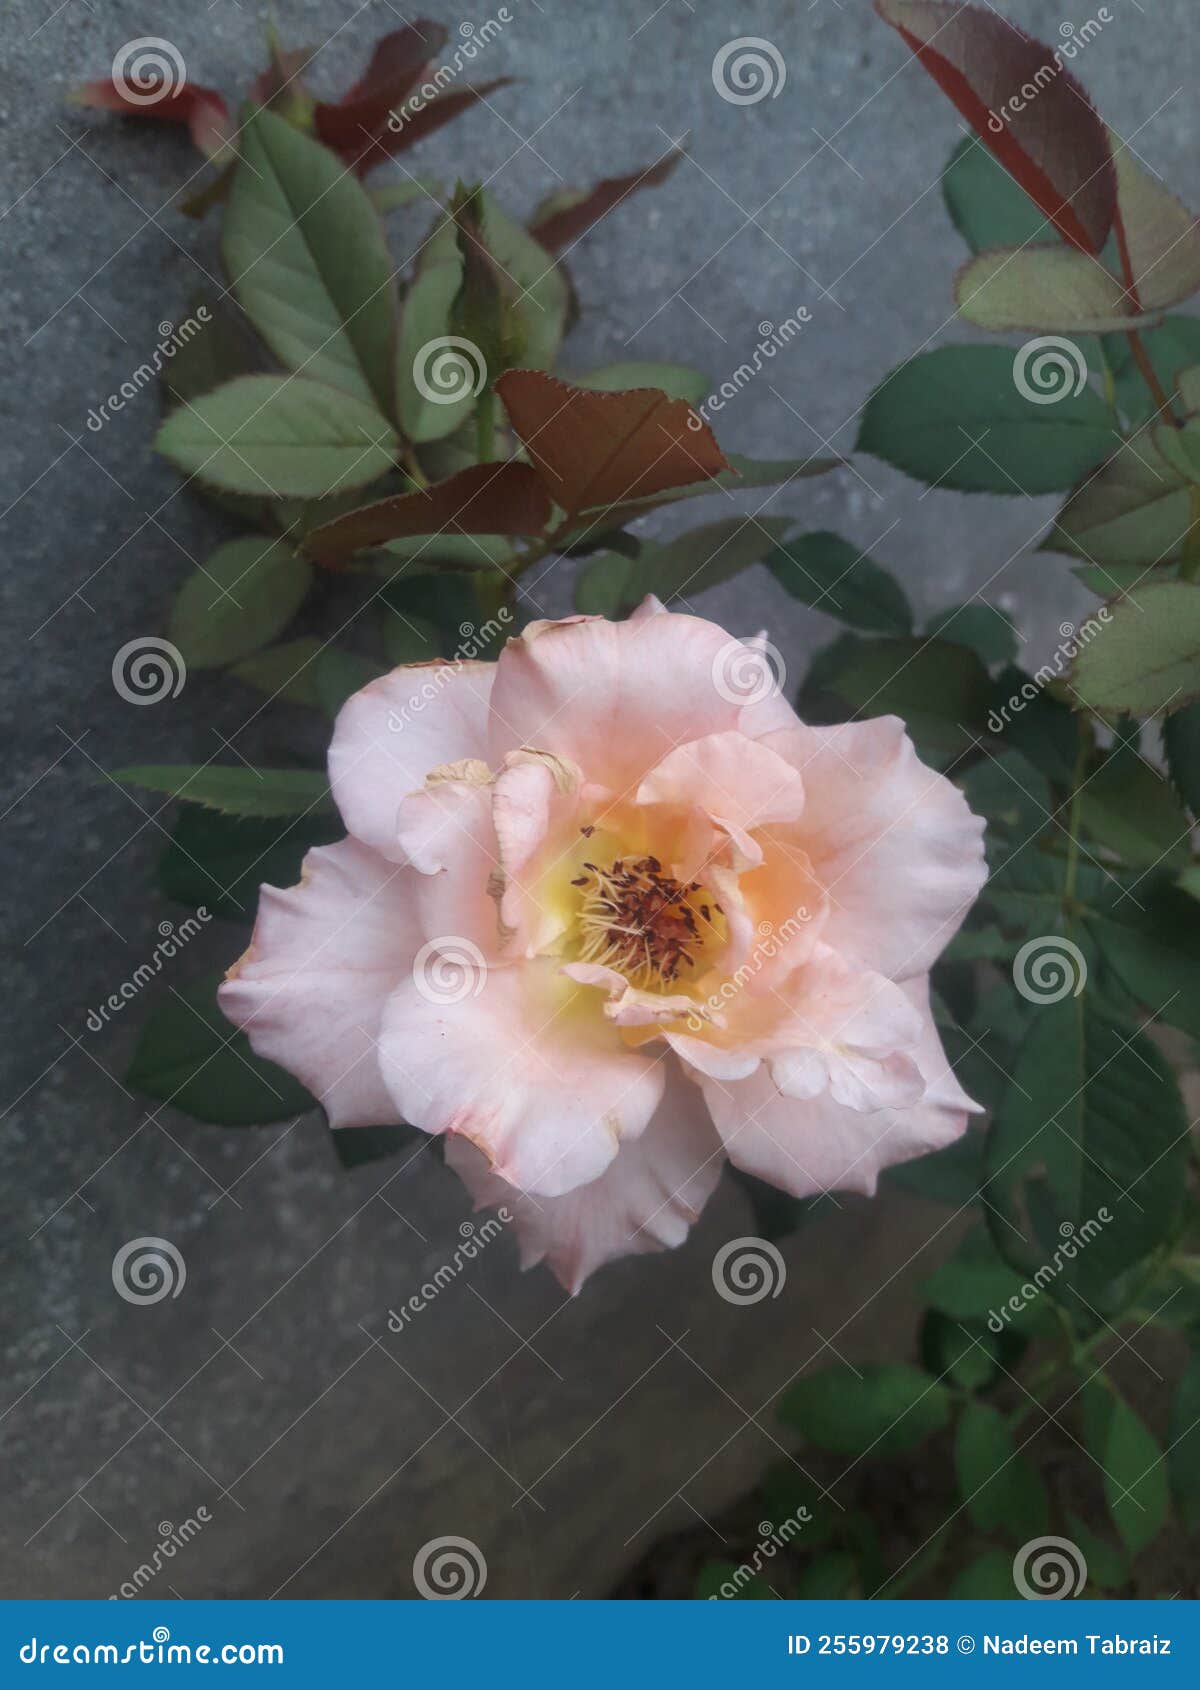 nature beauty jhelum pakipakistan rose flower